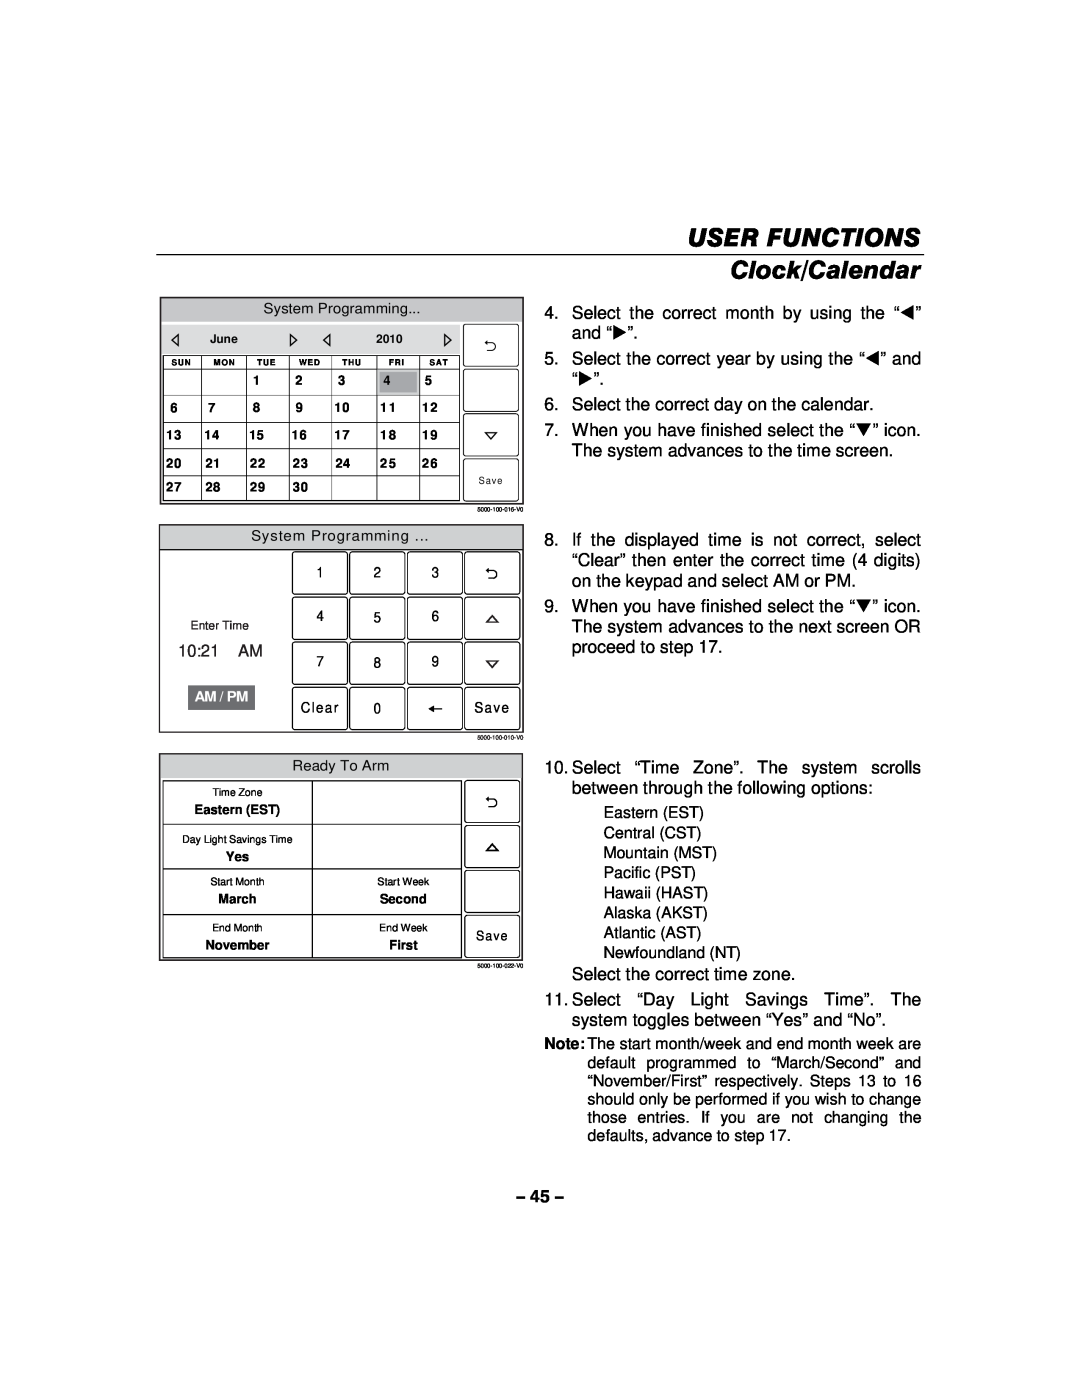 Honeywell L5100 manual Clock/Calendar, User Functions 